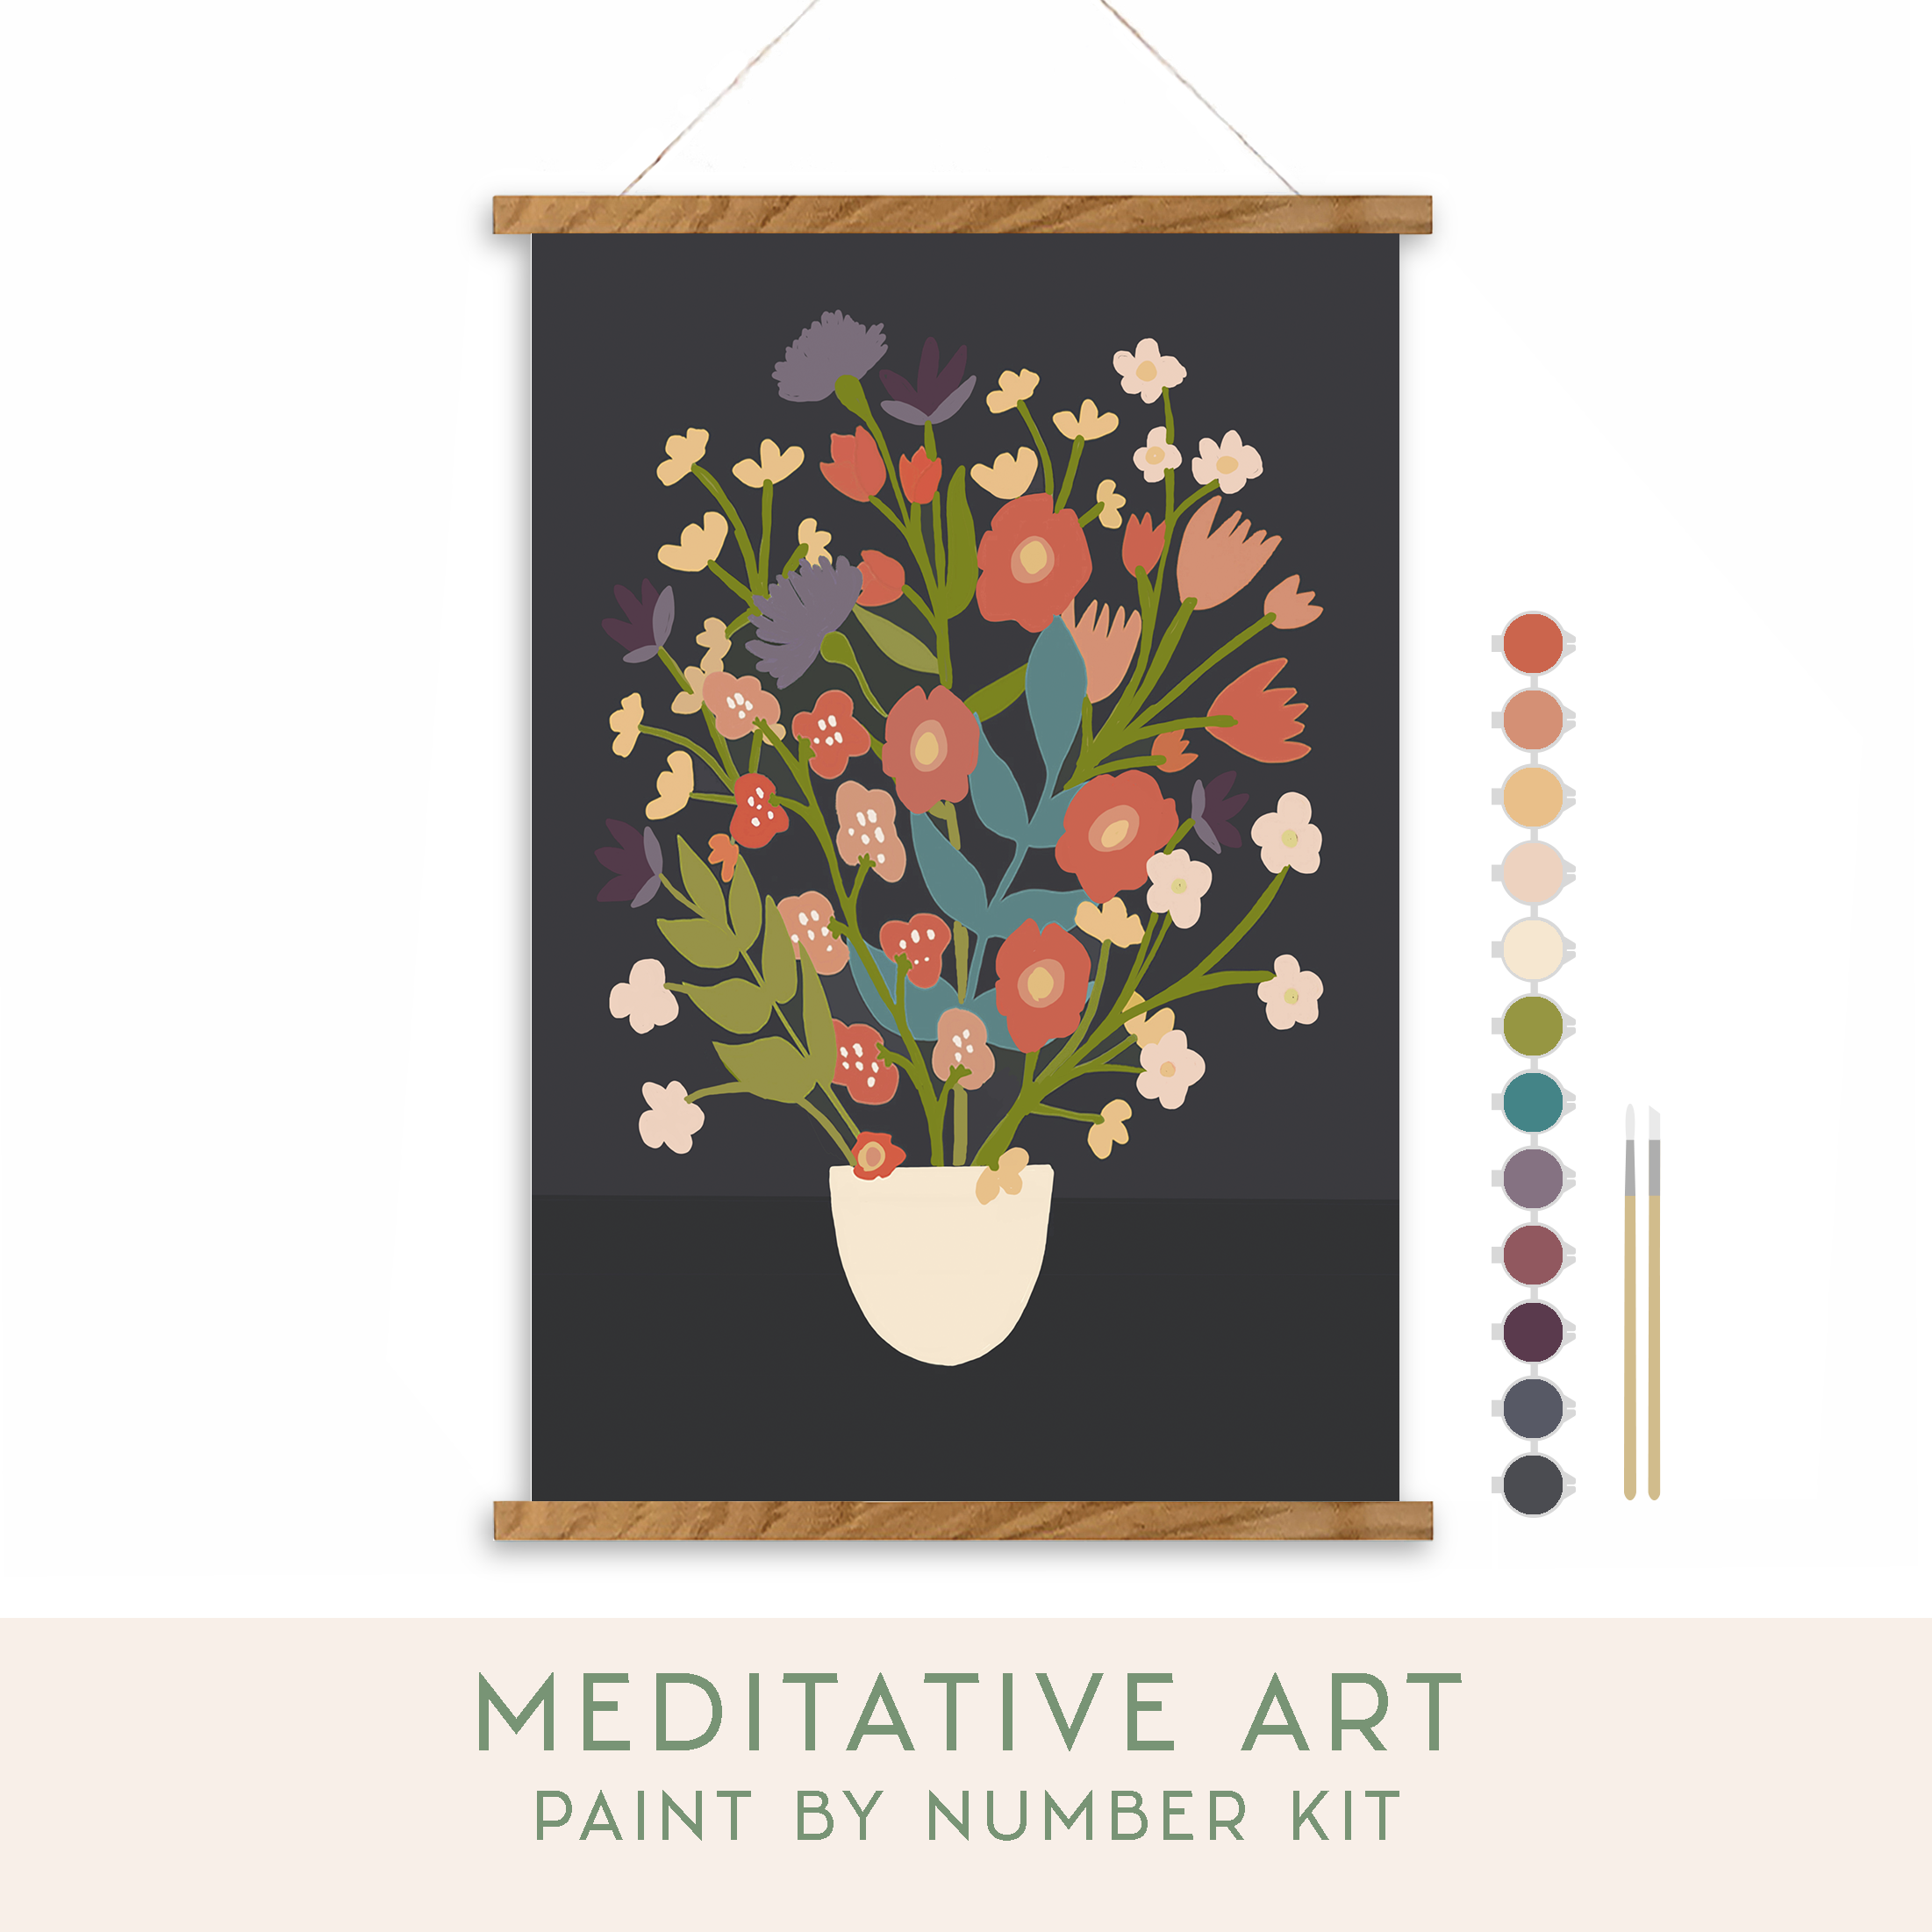 Flower Bouquet Meditative Art Paint by Number Kit: Paint by Number Kit